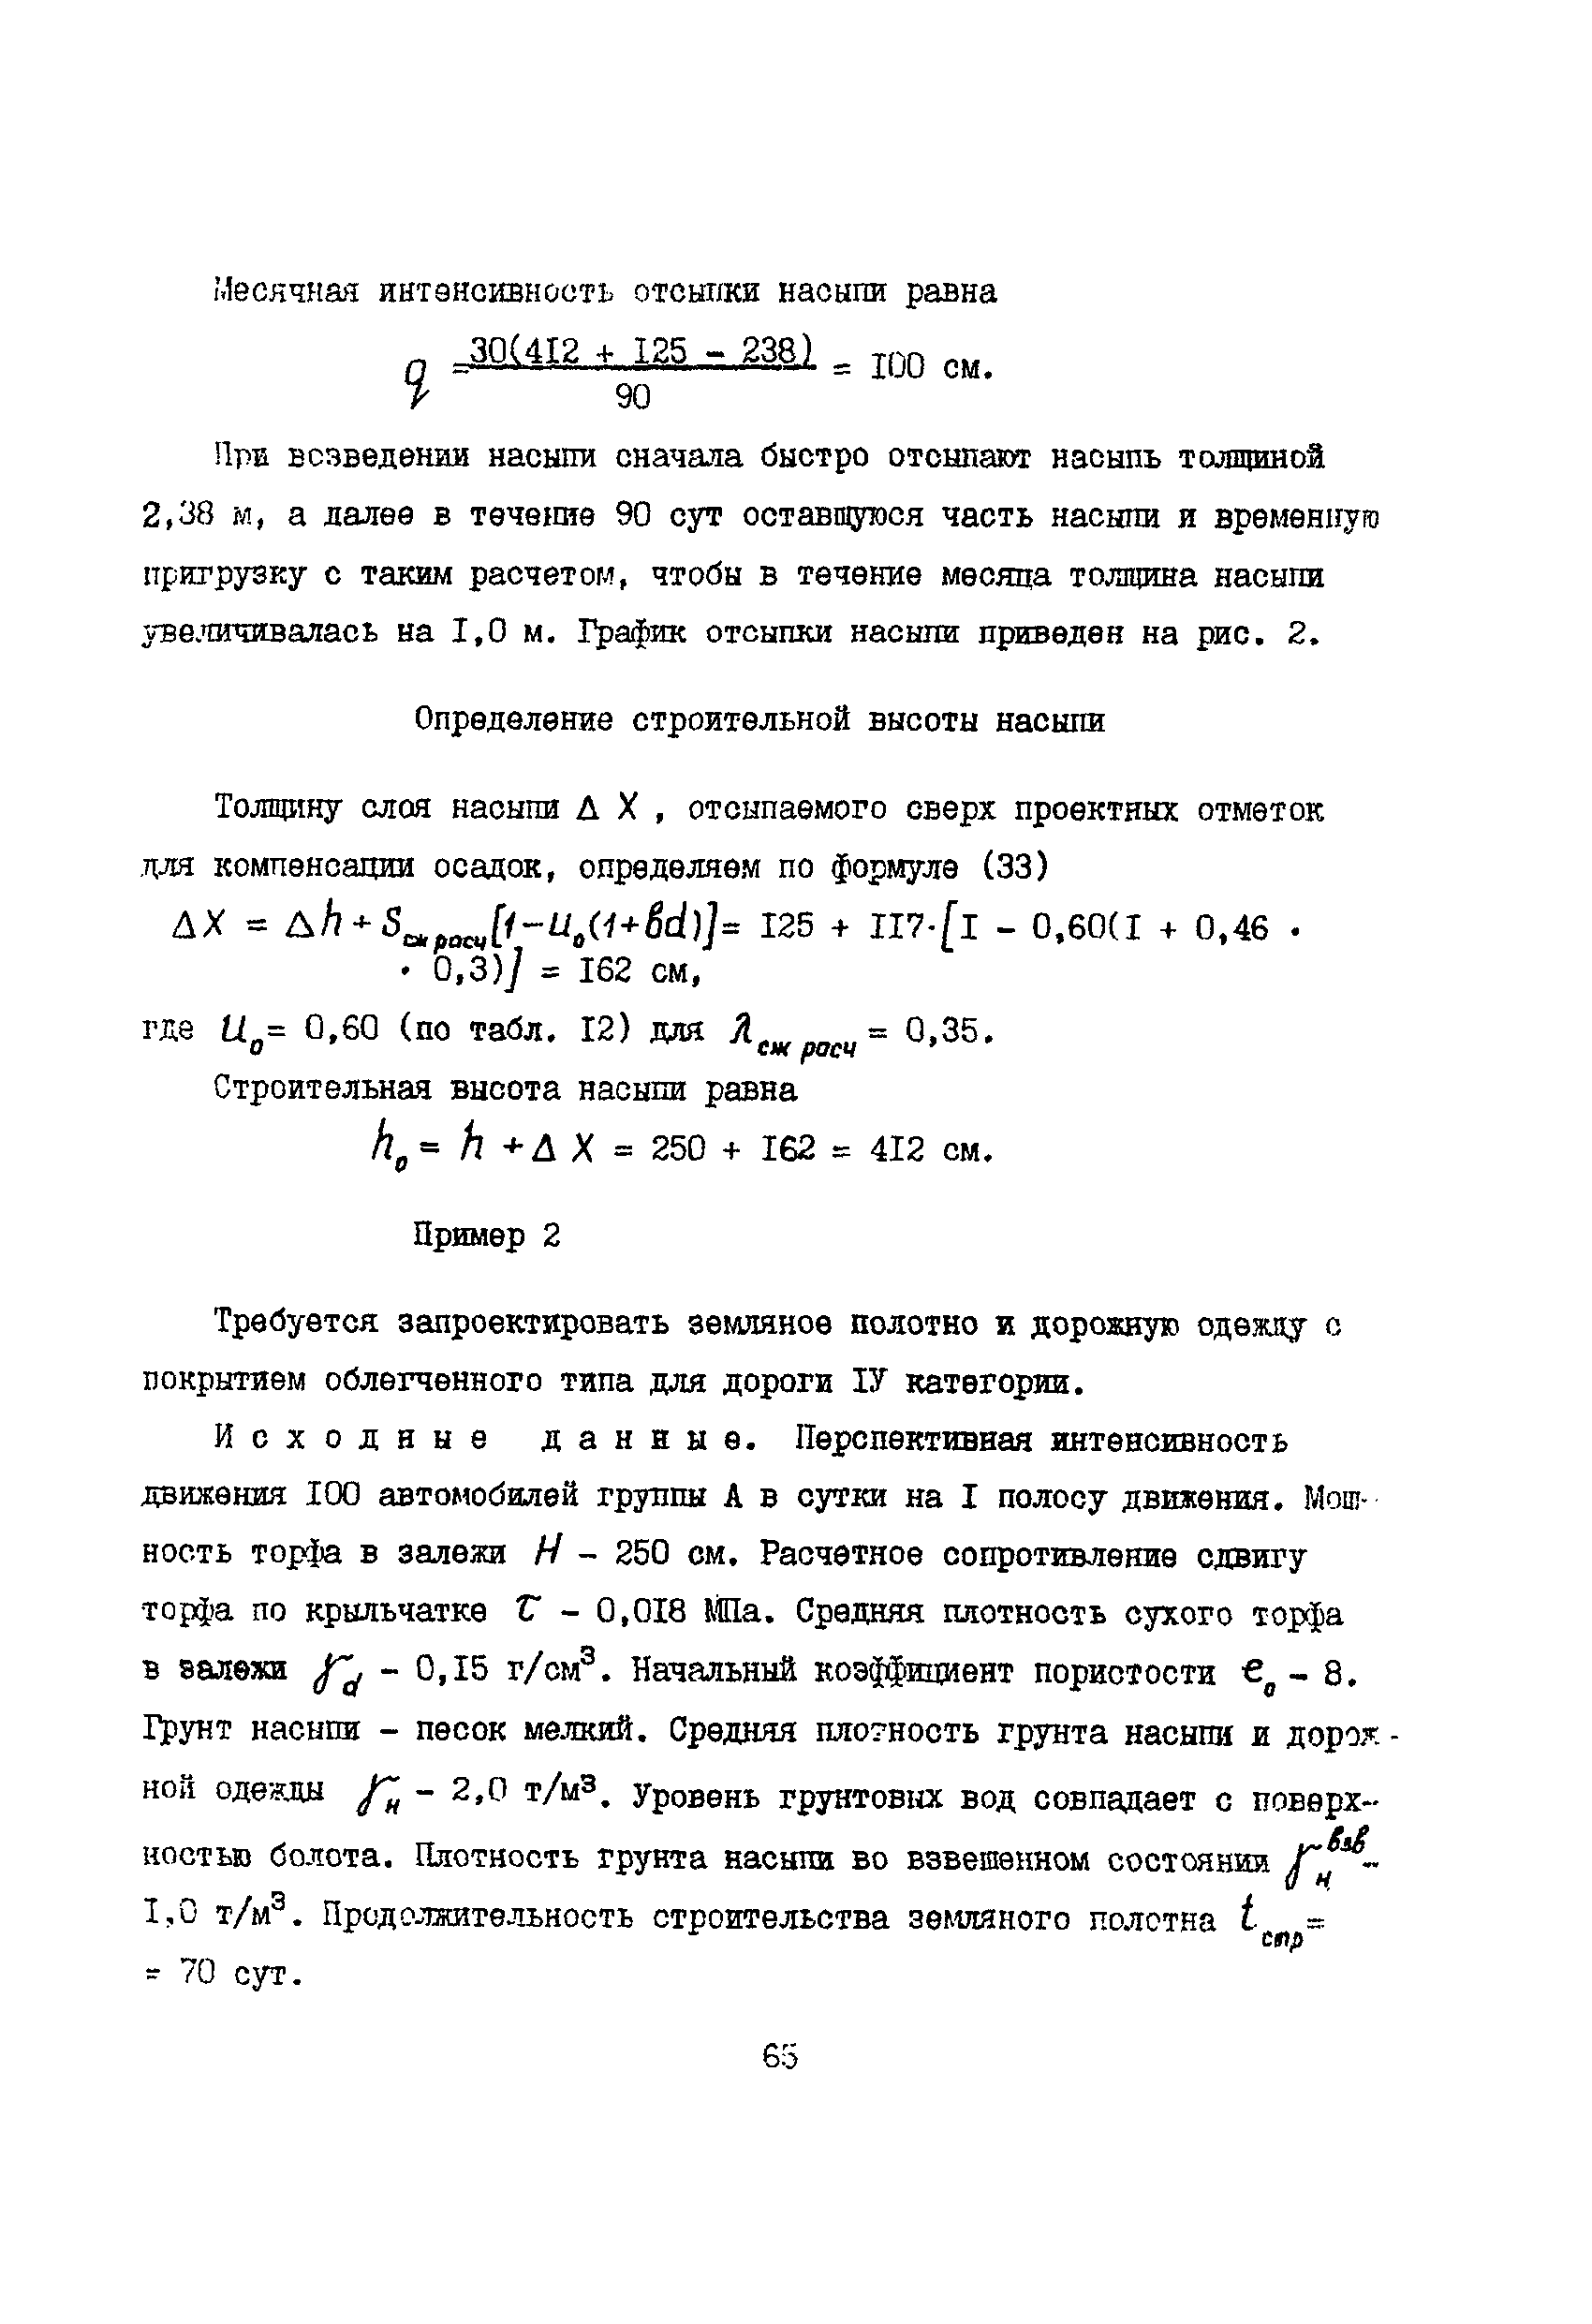 РСН 09-85 Госстрой БССР